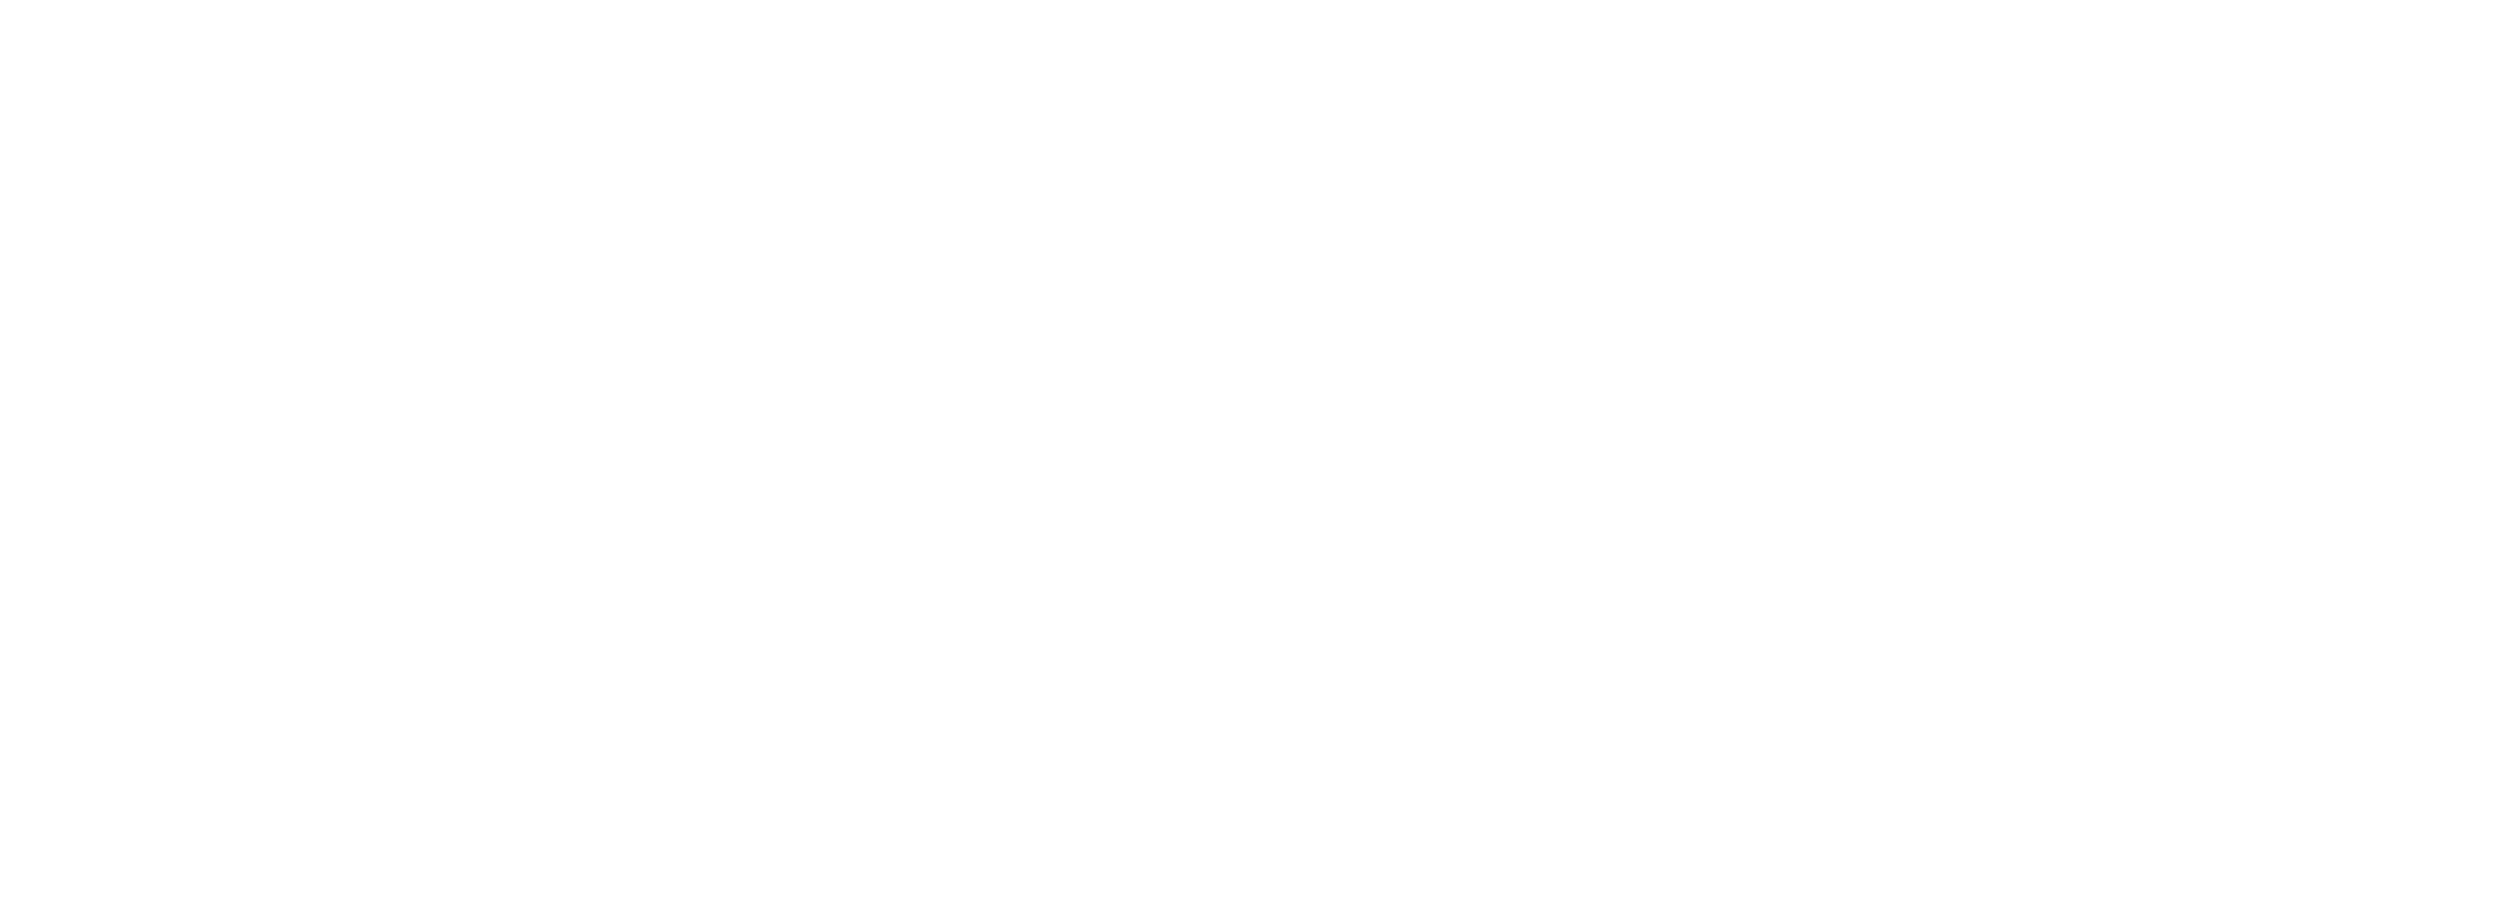 The Conscious Coach   A Communication Expert